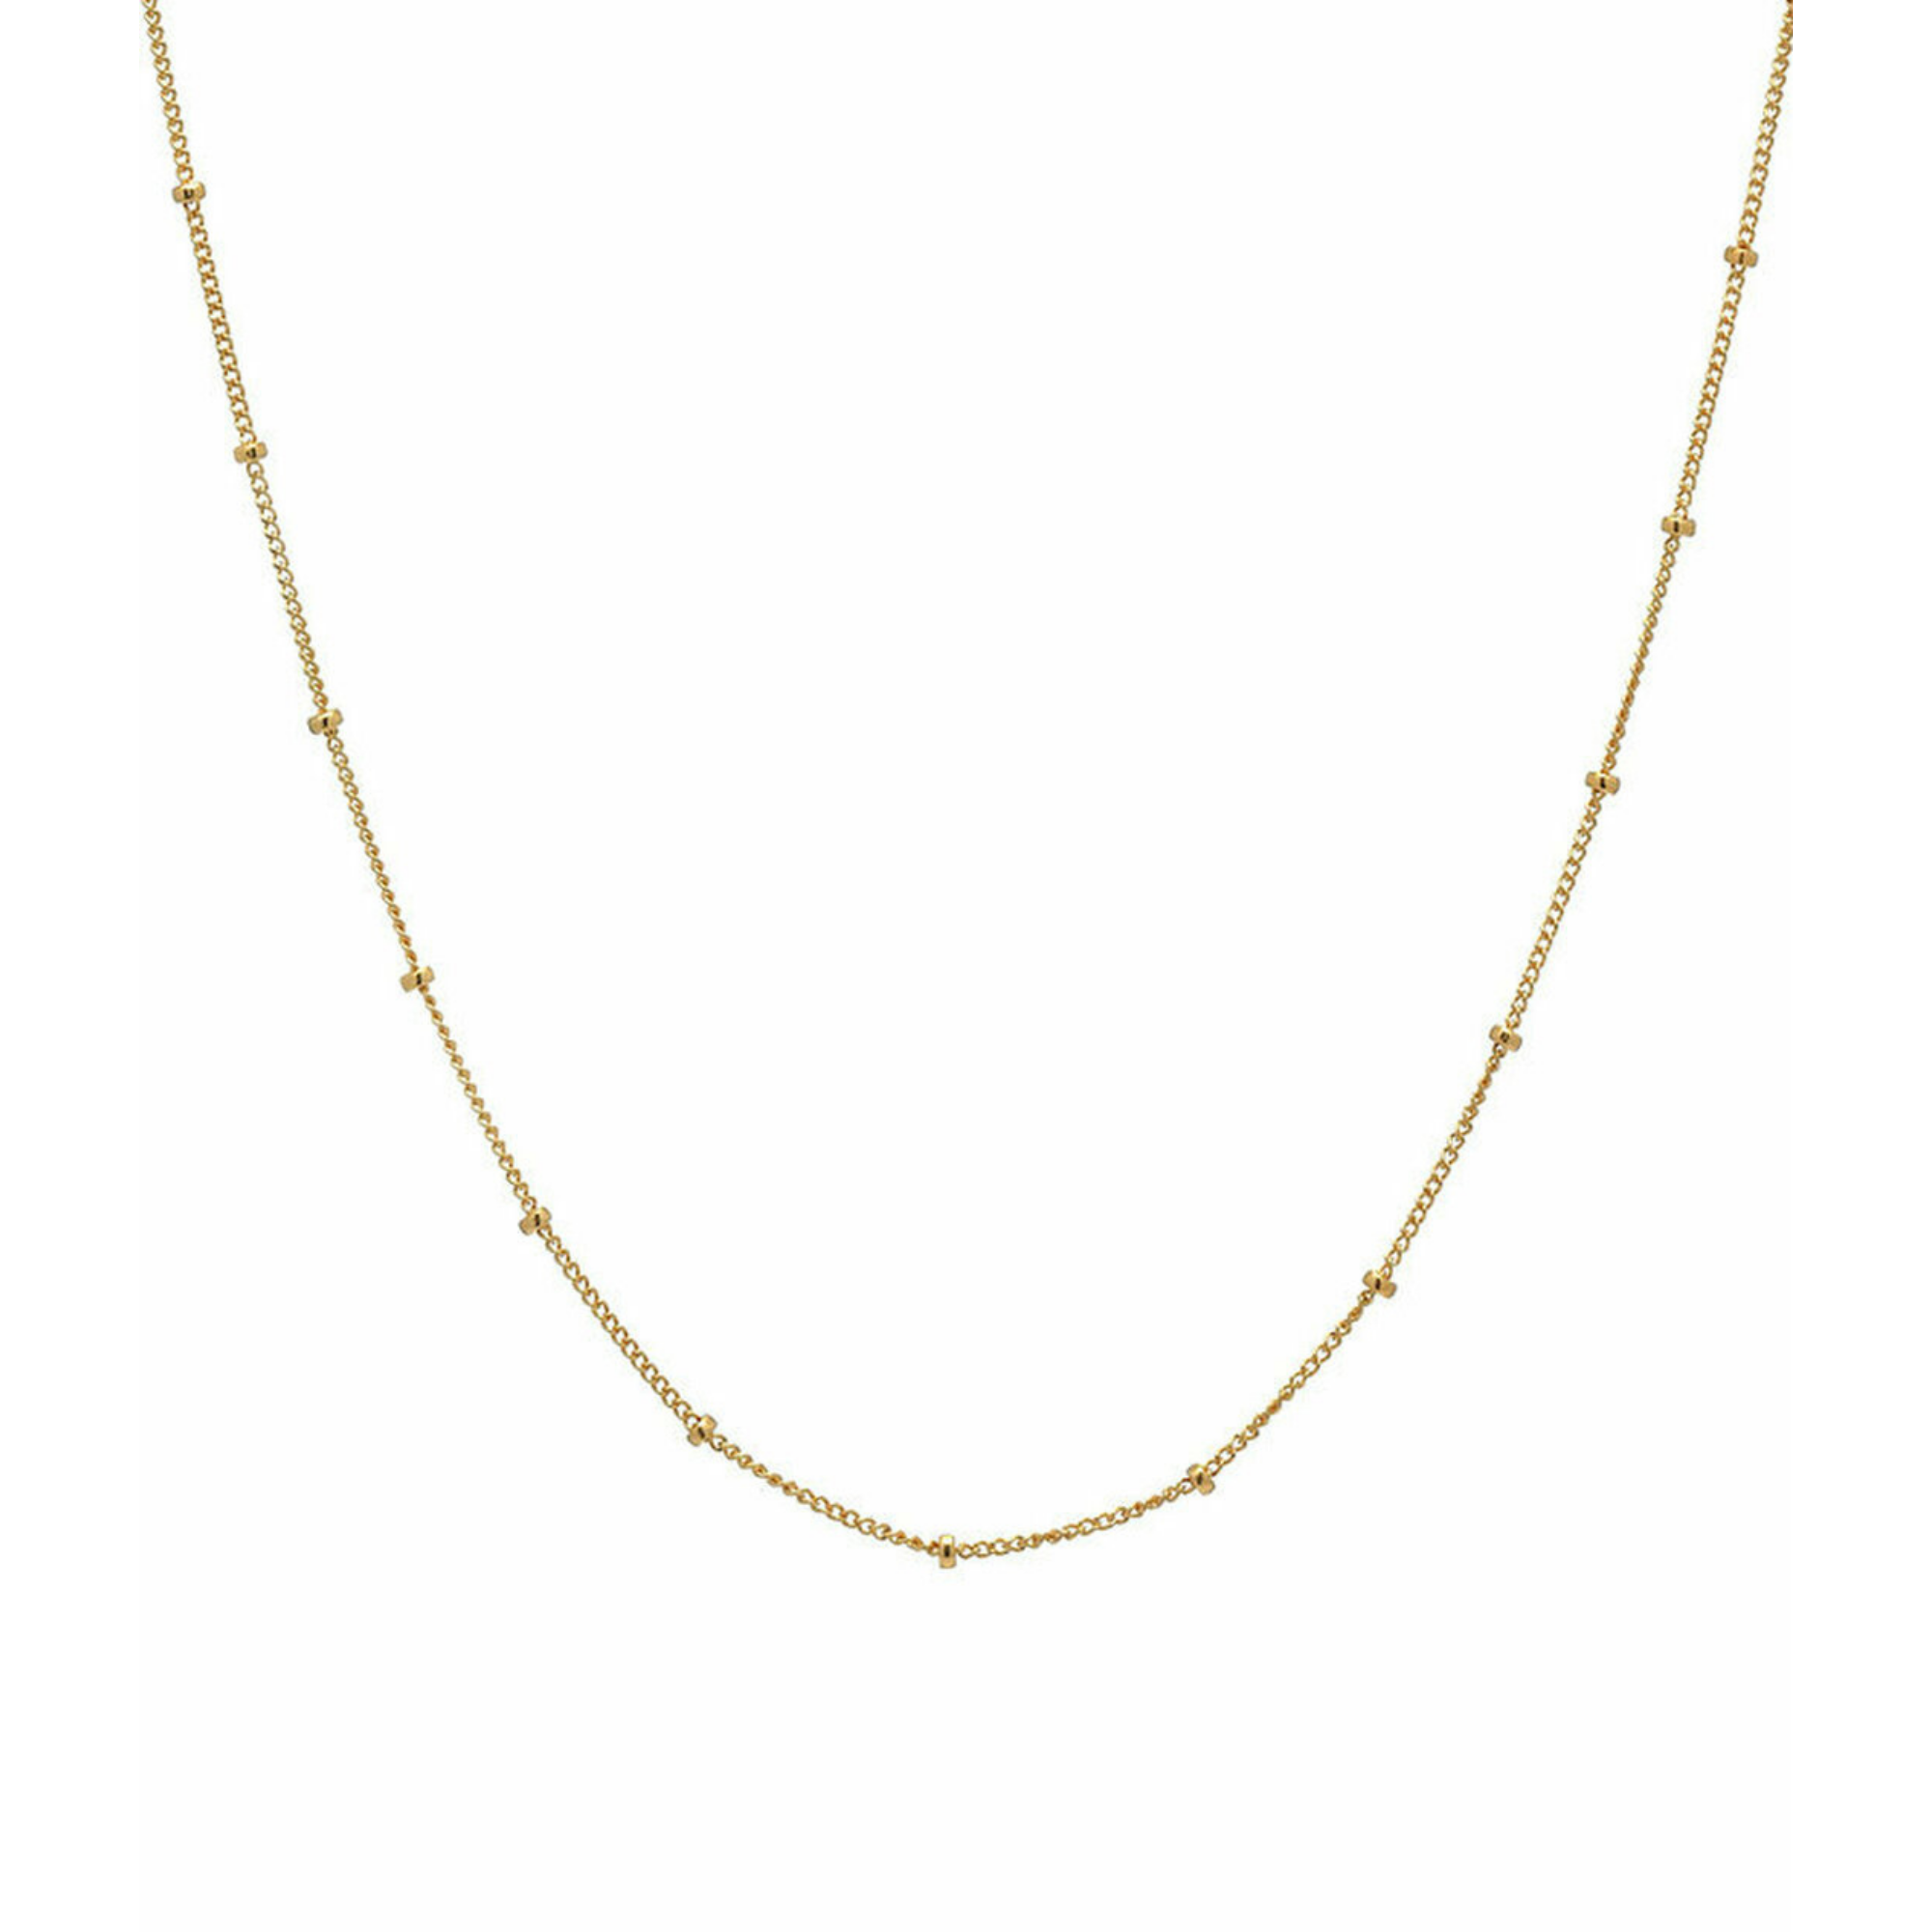 Zoe Lev 14K Gold Segment Chain Link Necklace, $340